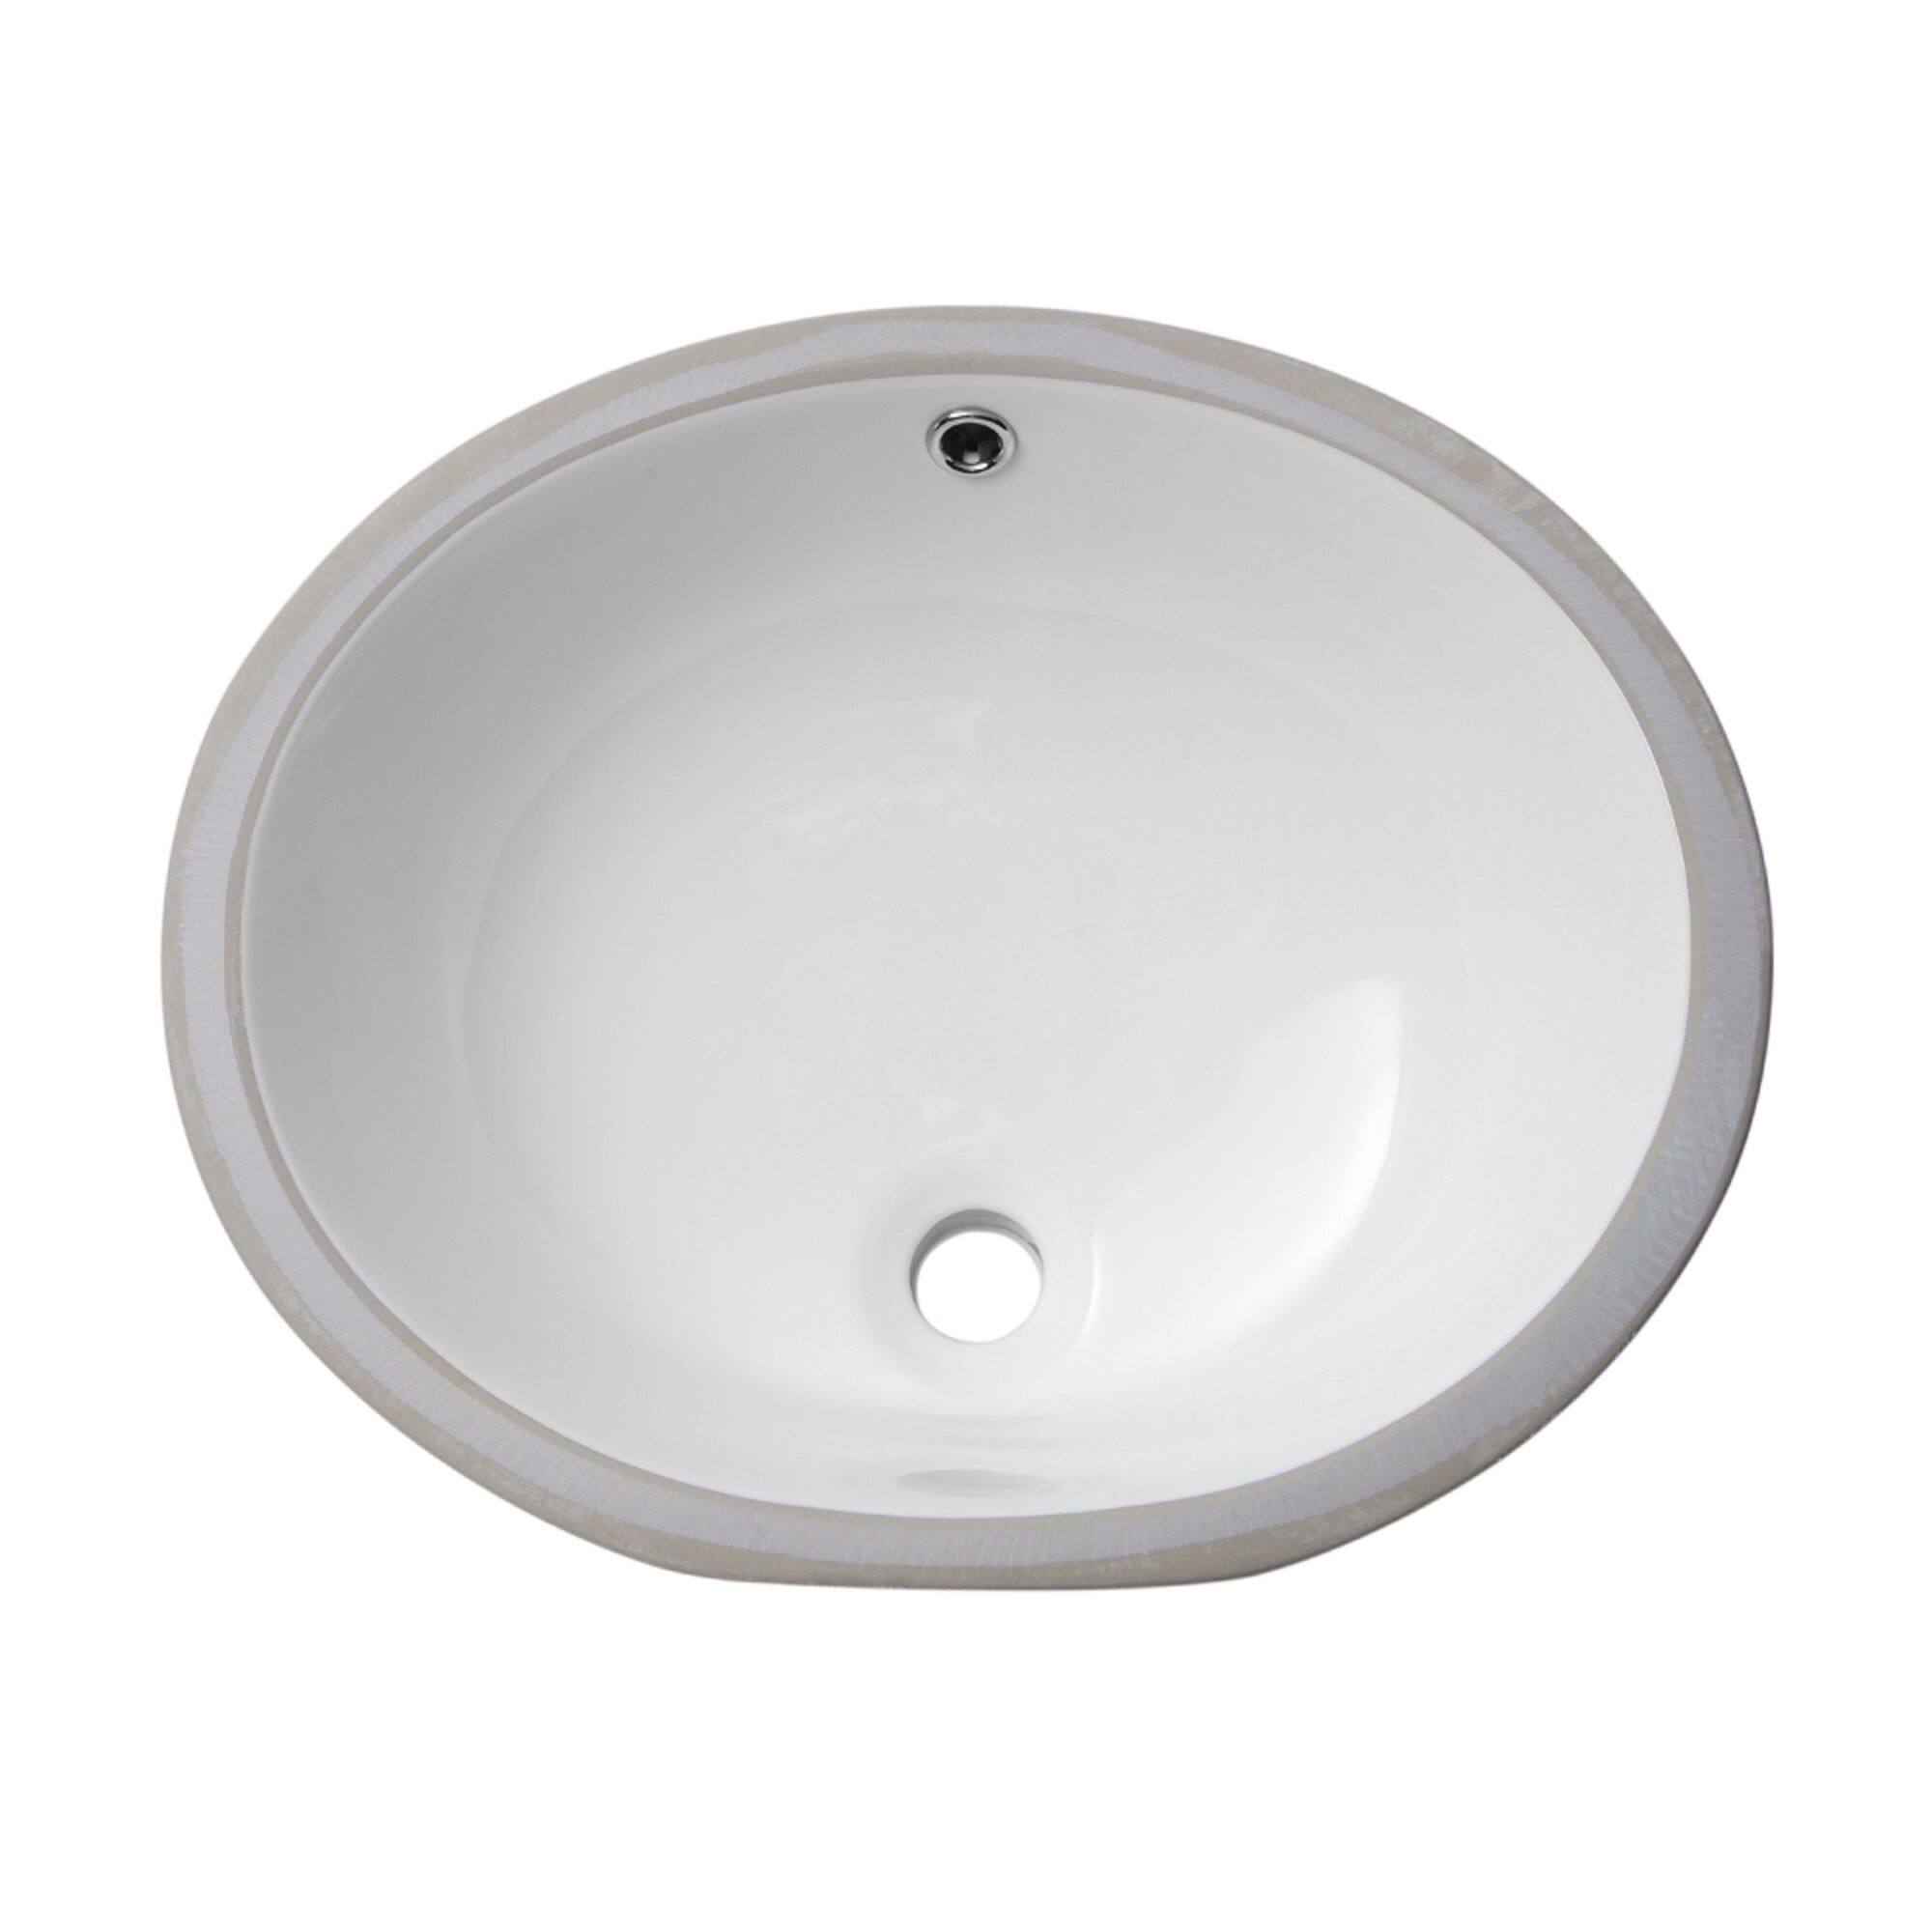 Lordear 19 inch Undermount Bathroom Sink White Ceramic Oval Lavatory ...